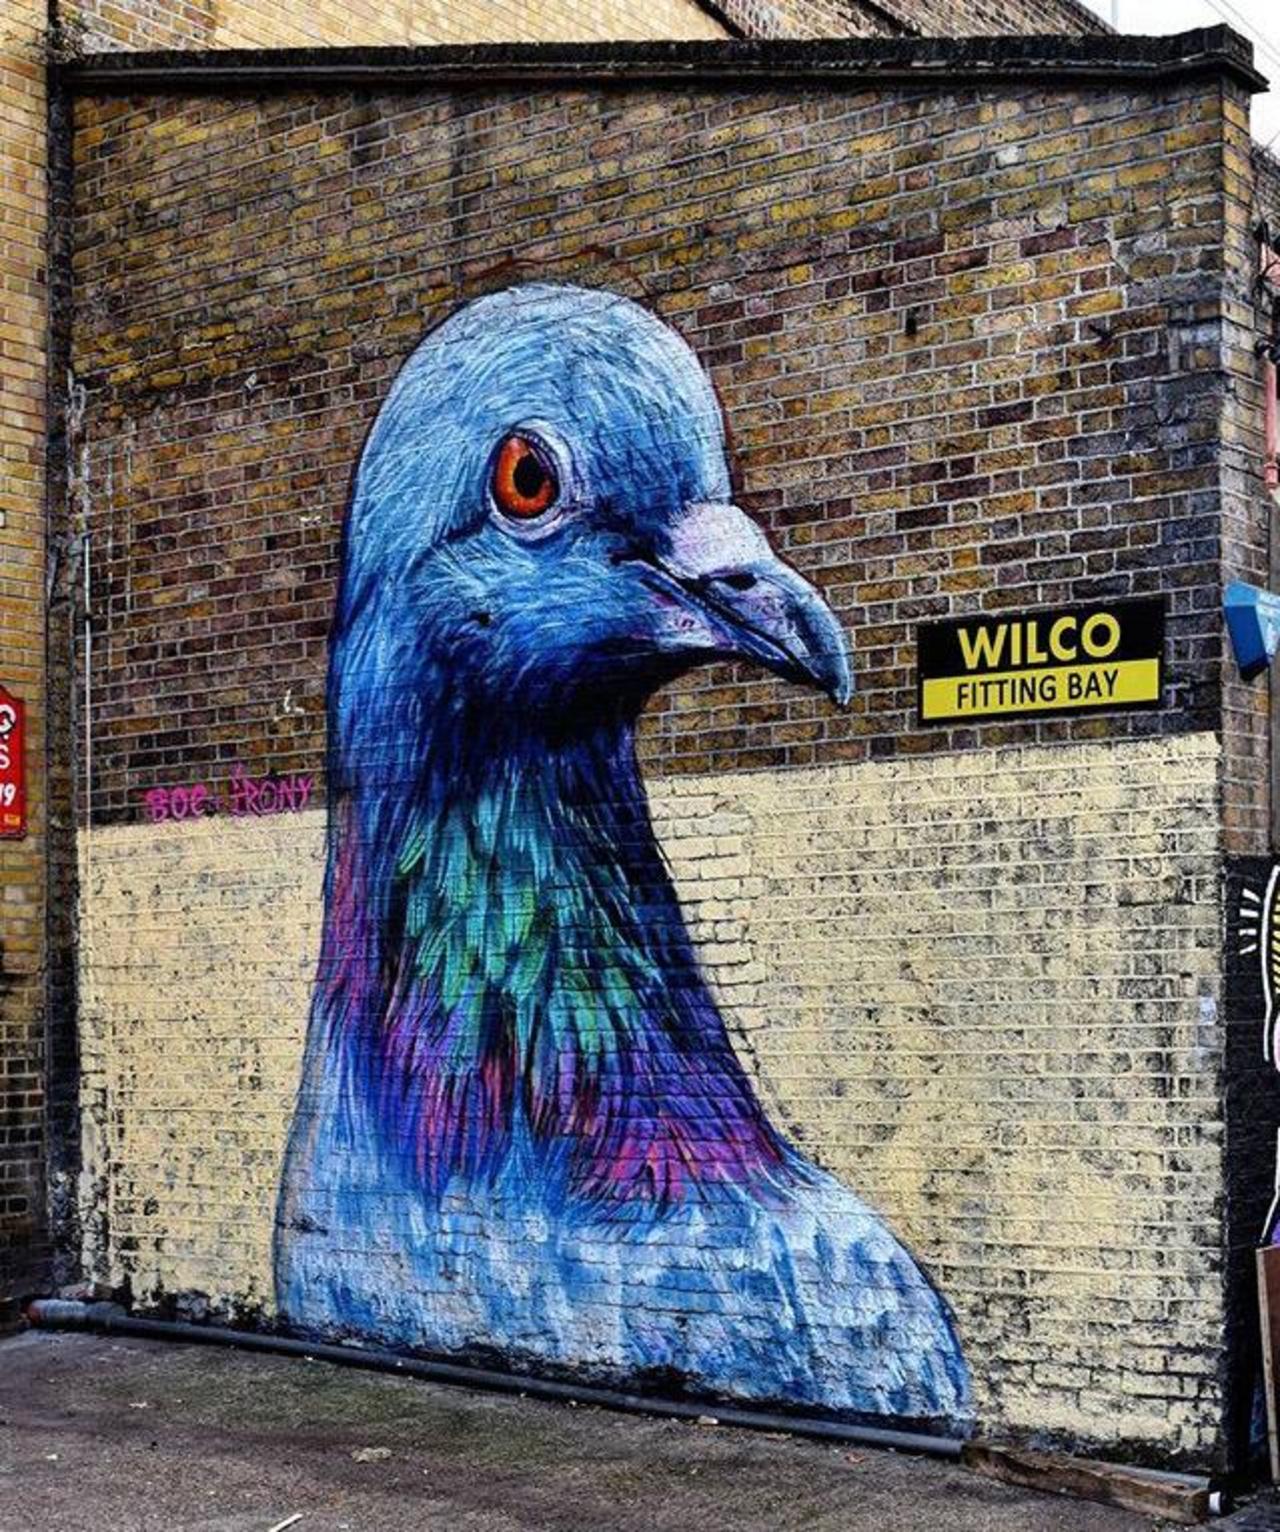 ＠rzzp ＠rzzp ＠kanta_1123 だいすきよー　Street Art by Placee Boe & whoamirony in London 

#art #graffiti #mural #streetart http://t.co/rzCP4p9gcQ …